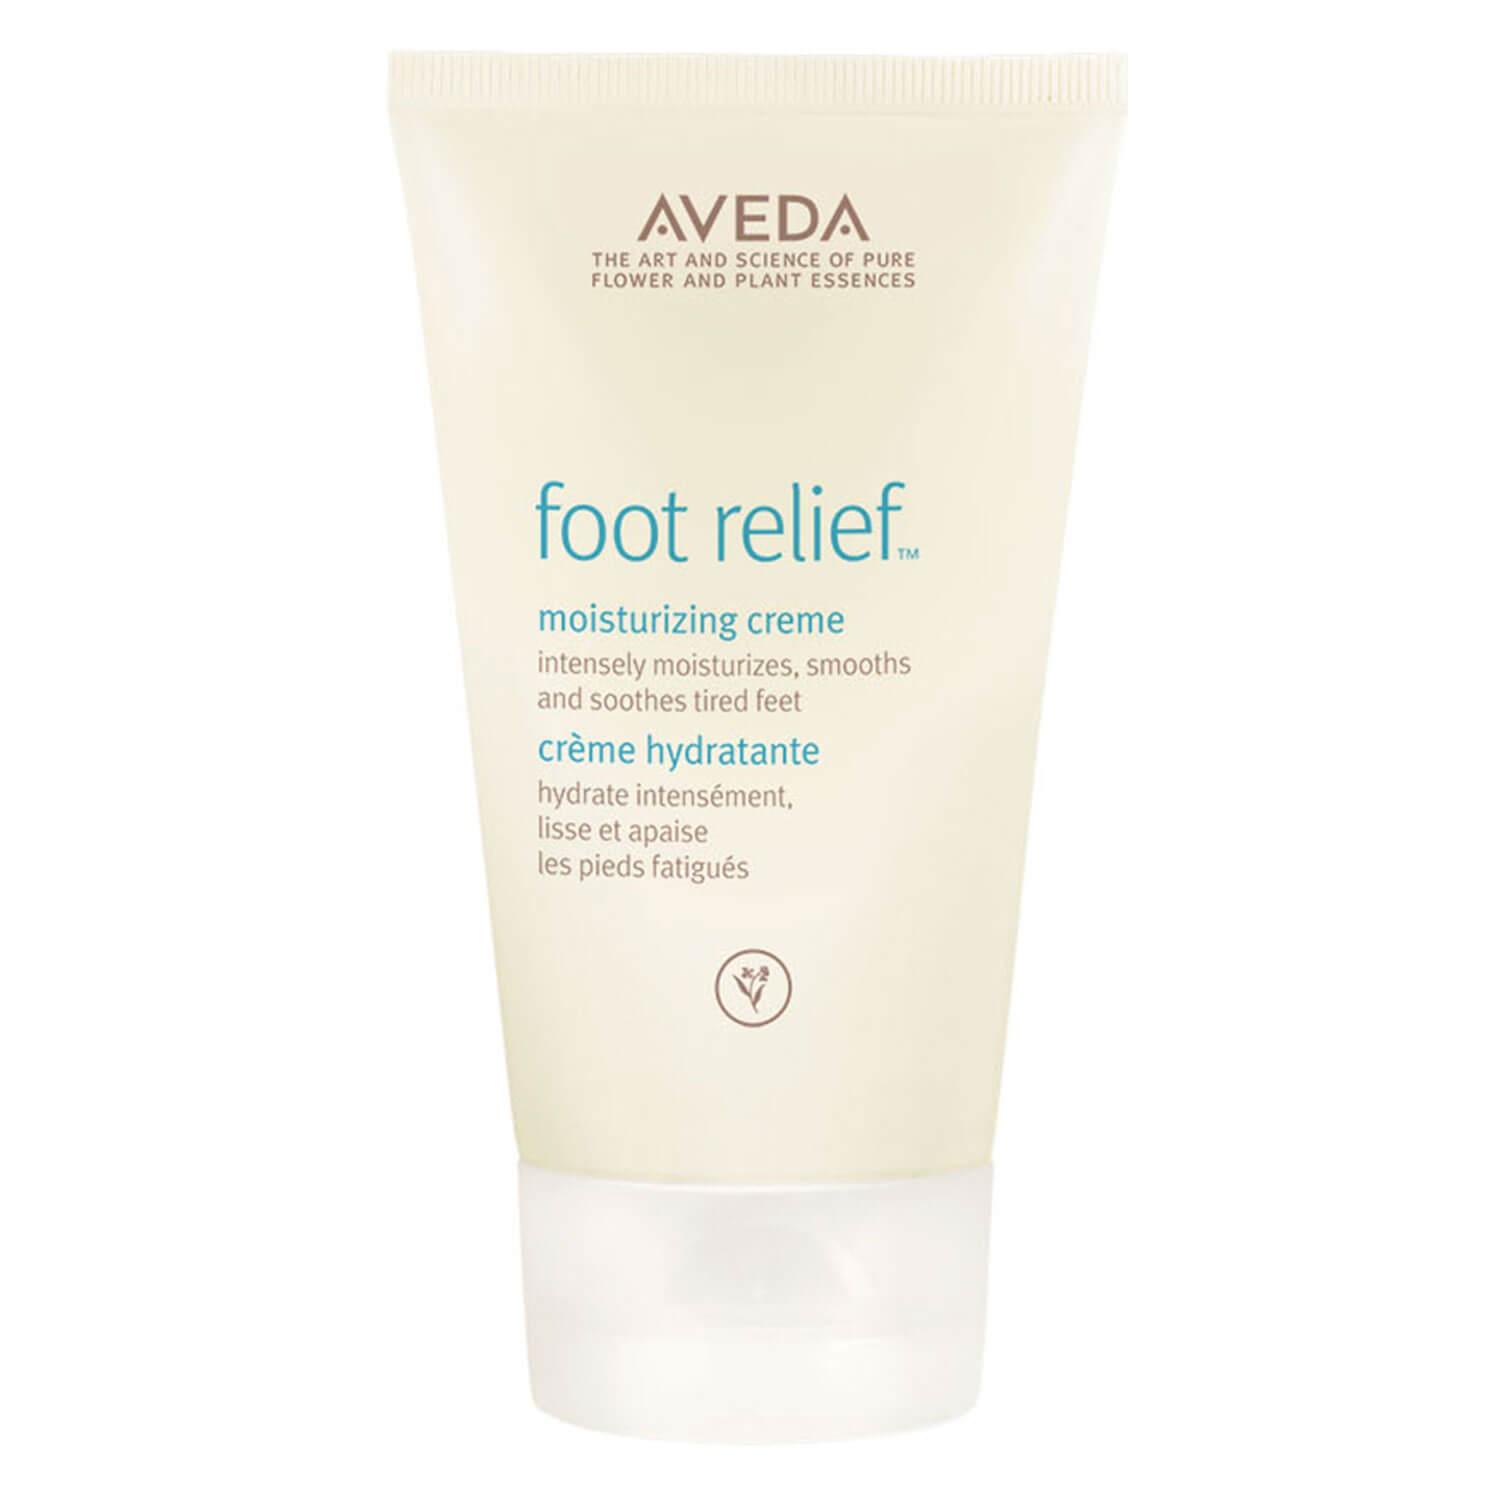 foot relief - moisturizing creme